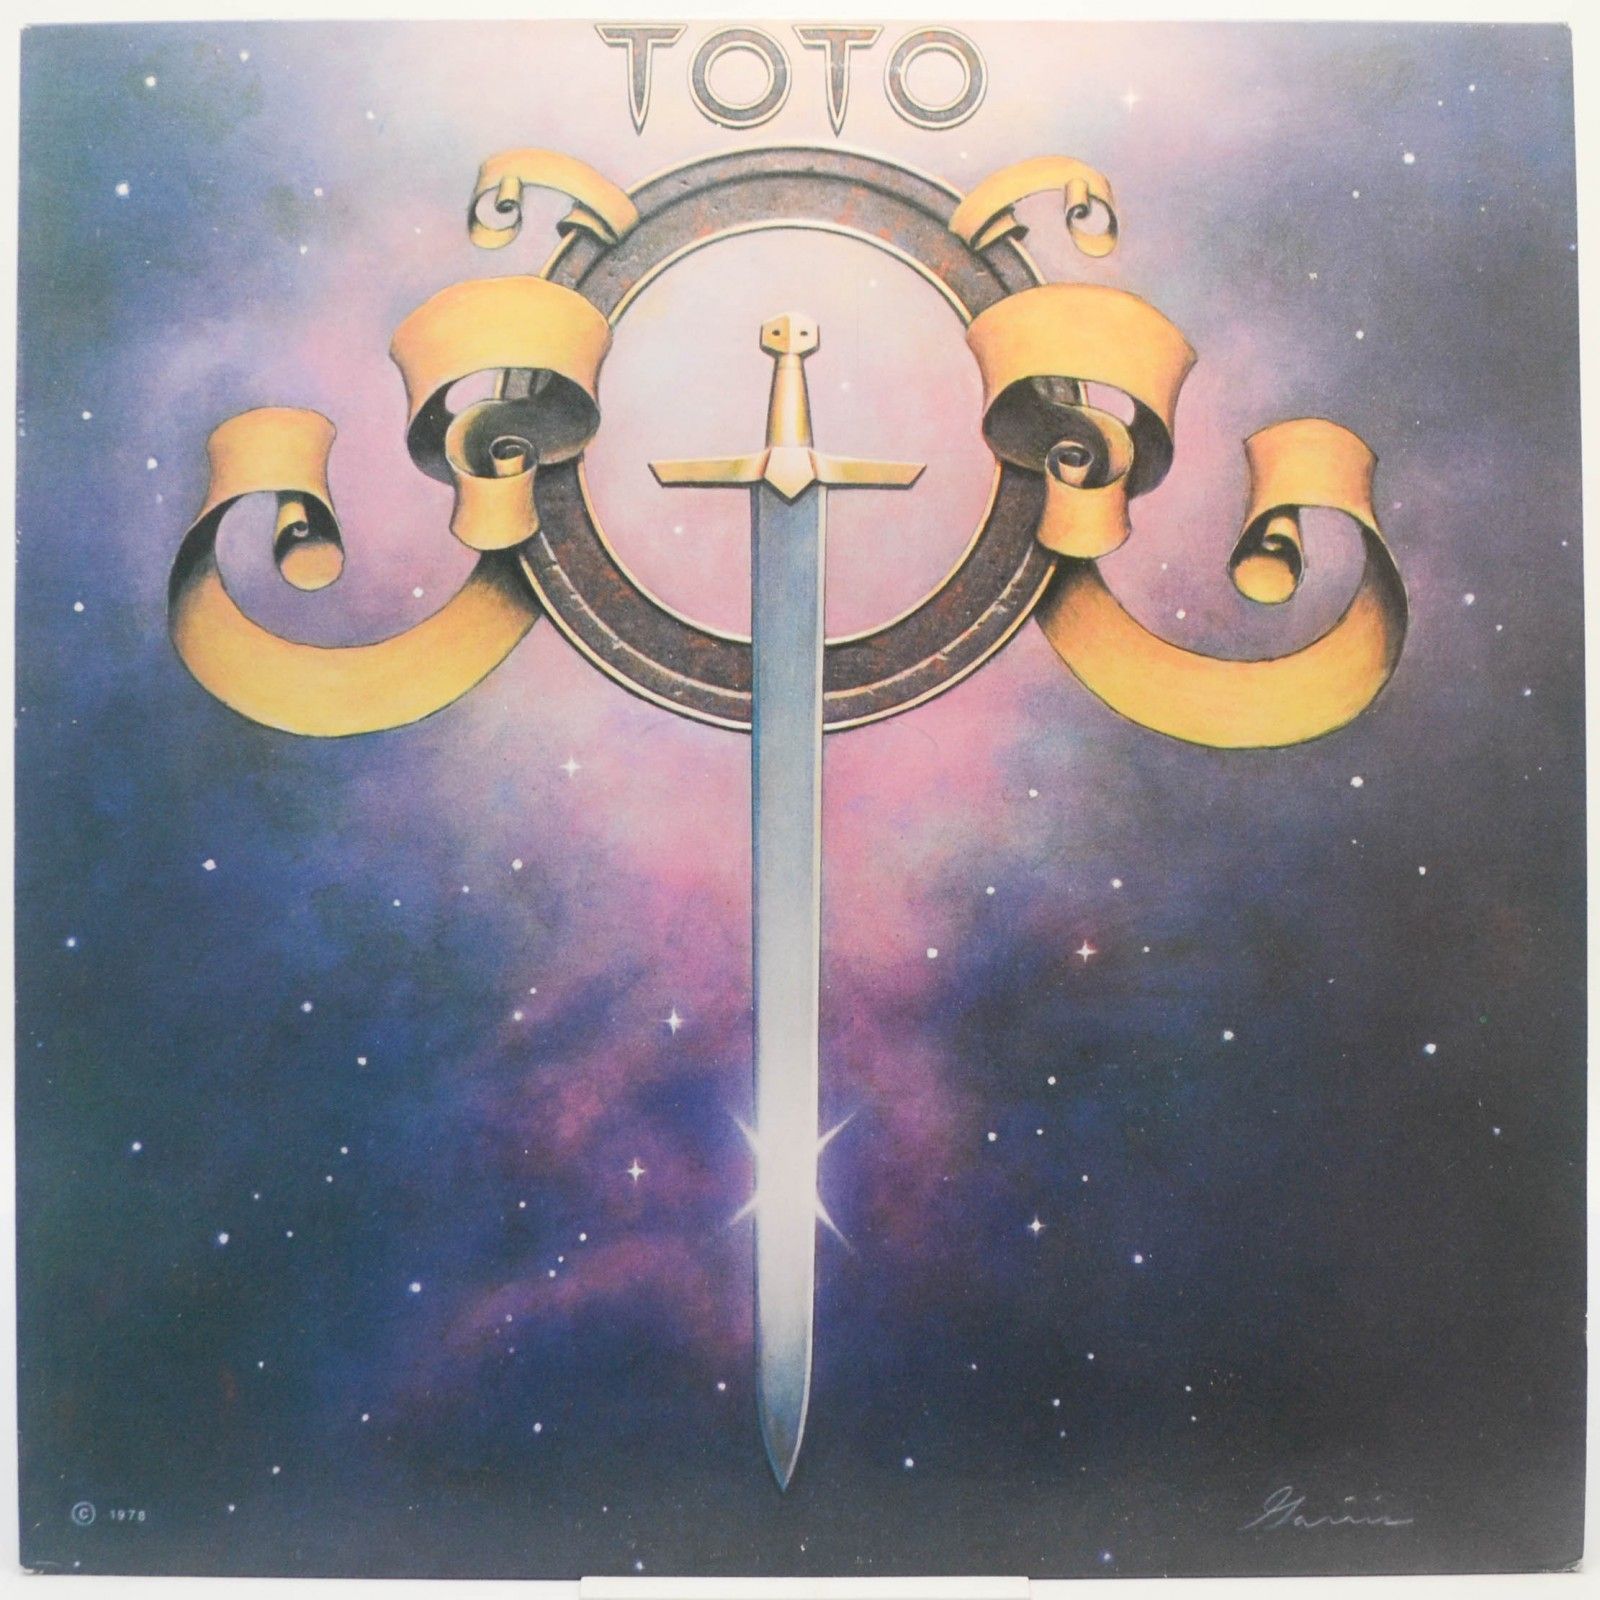 Toto — Toto, 1978